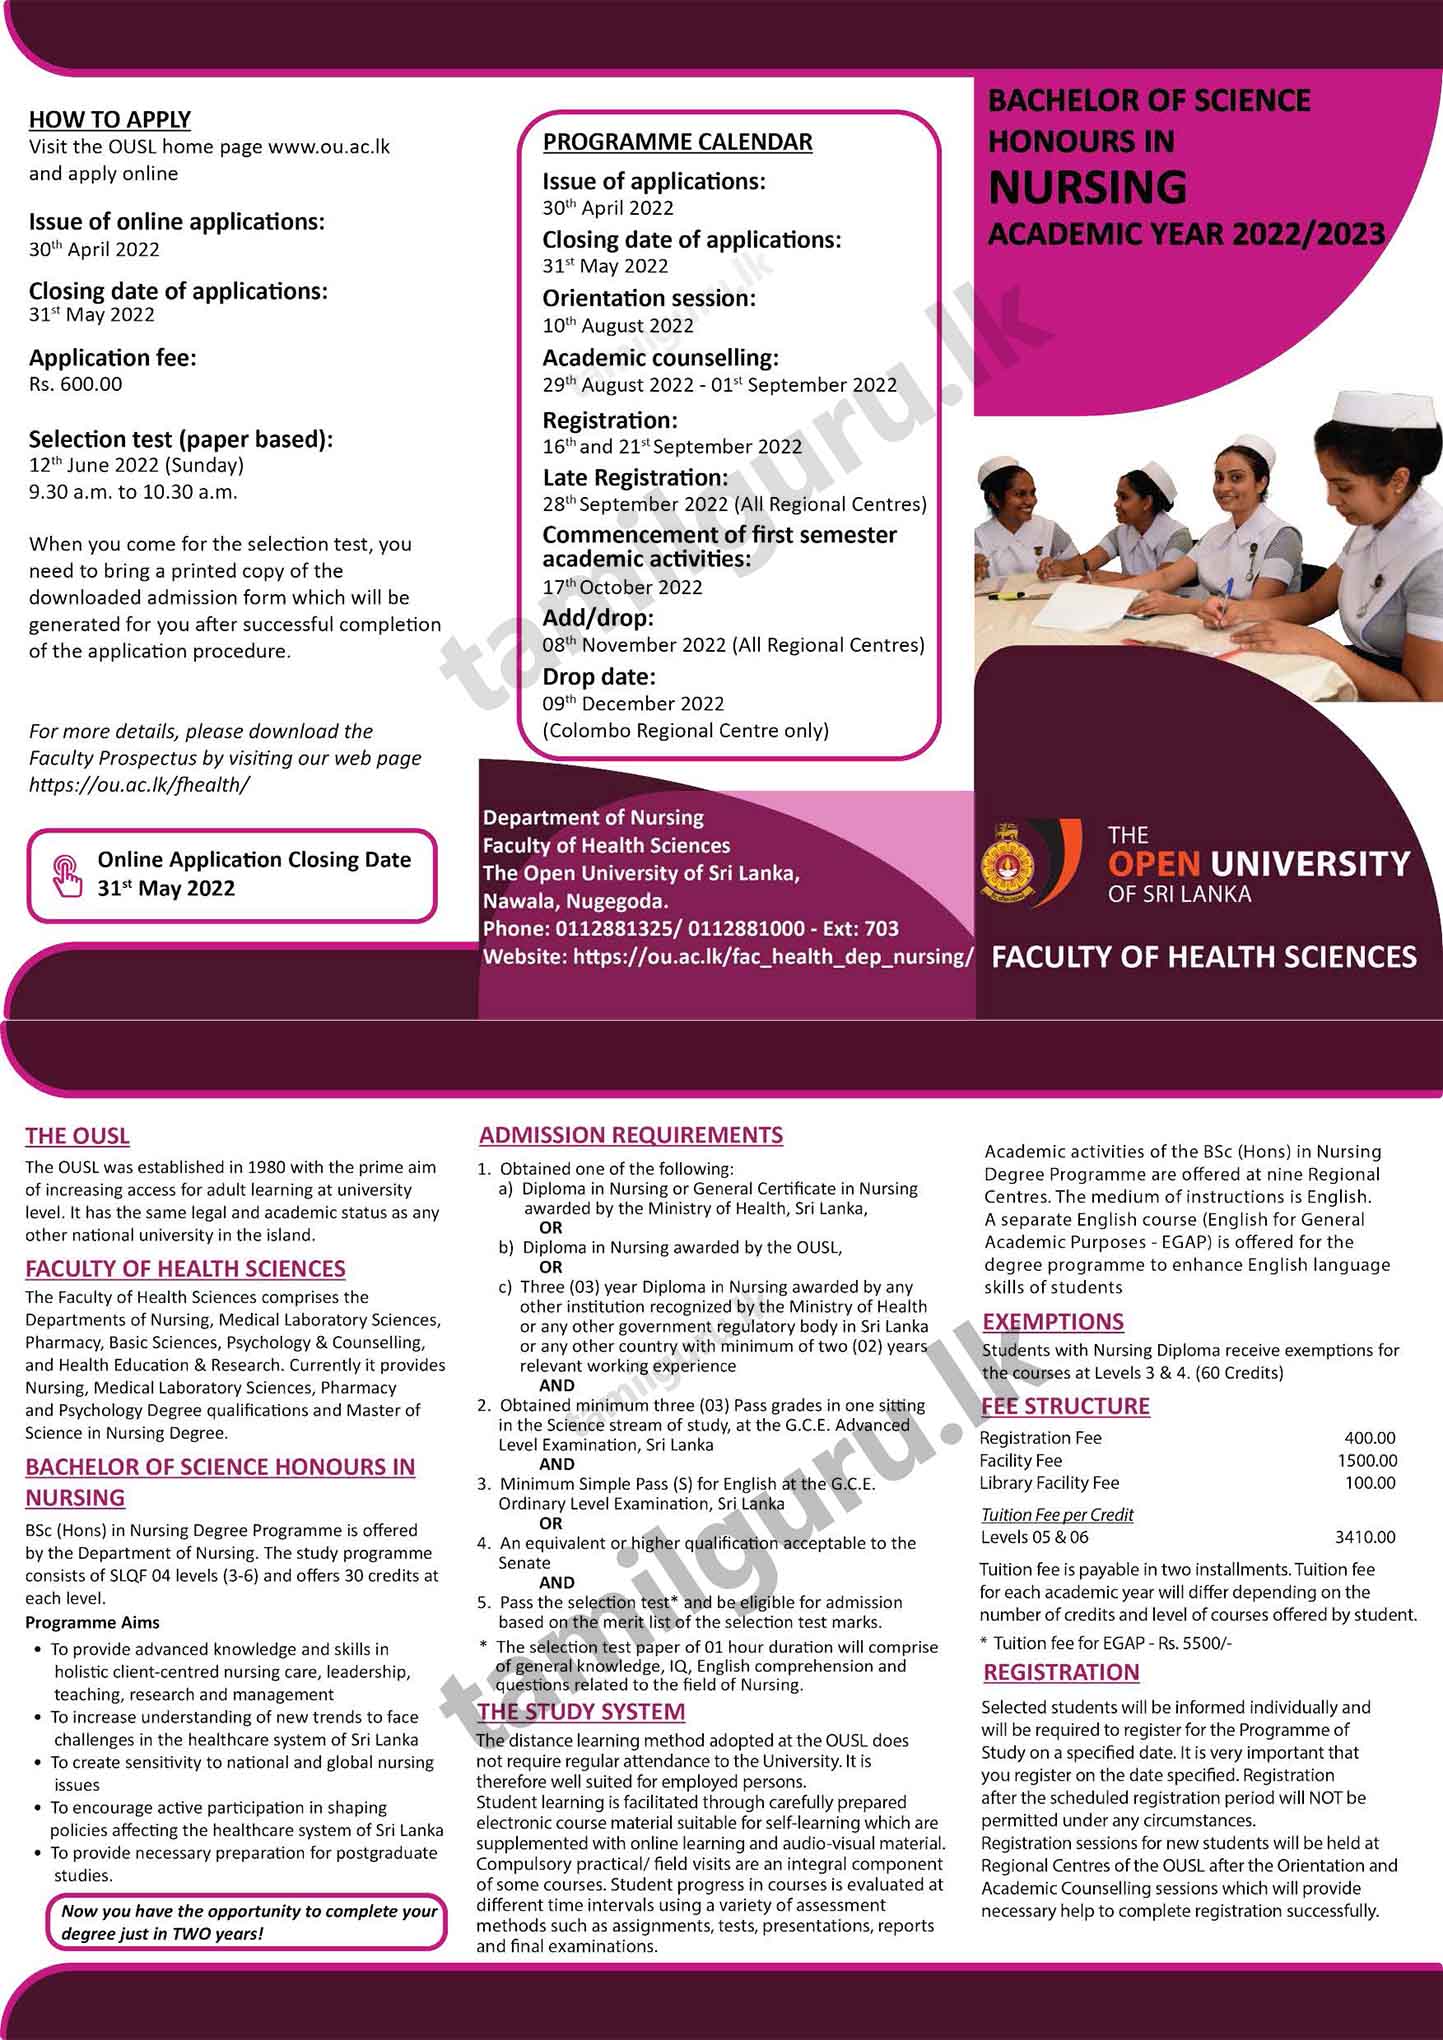 Bachelor of Science (BSc) in Nursing Degree Programme 2022/2023 - The Open University of Sri Lanka (OUSL)